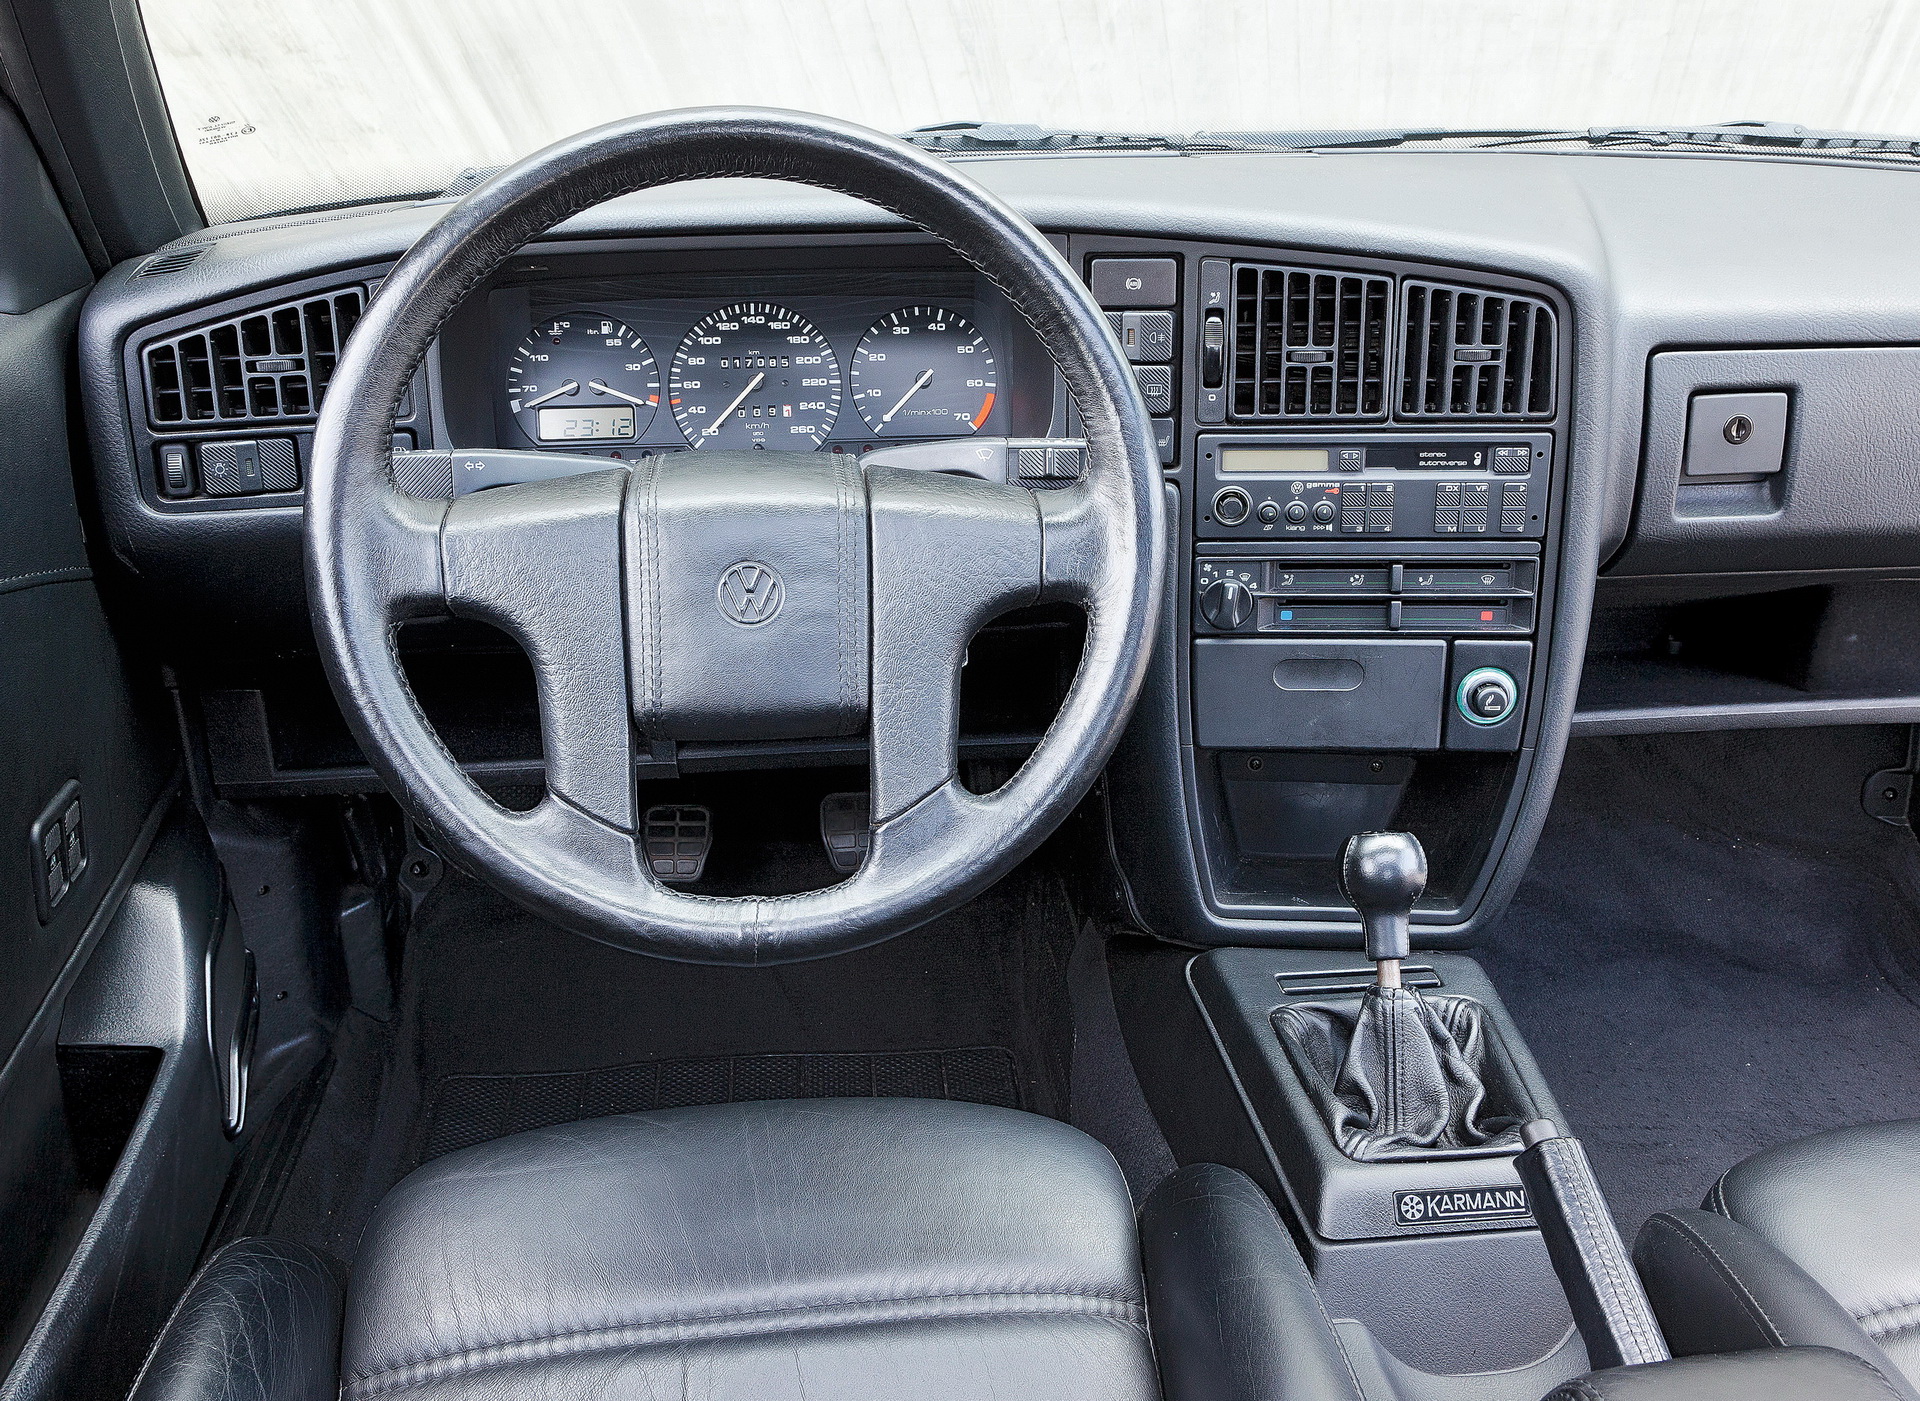 VW Corrado G60 1989-1993